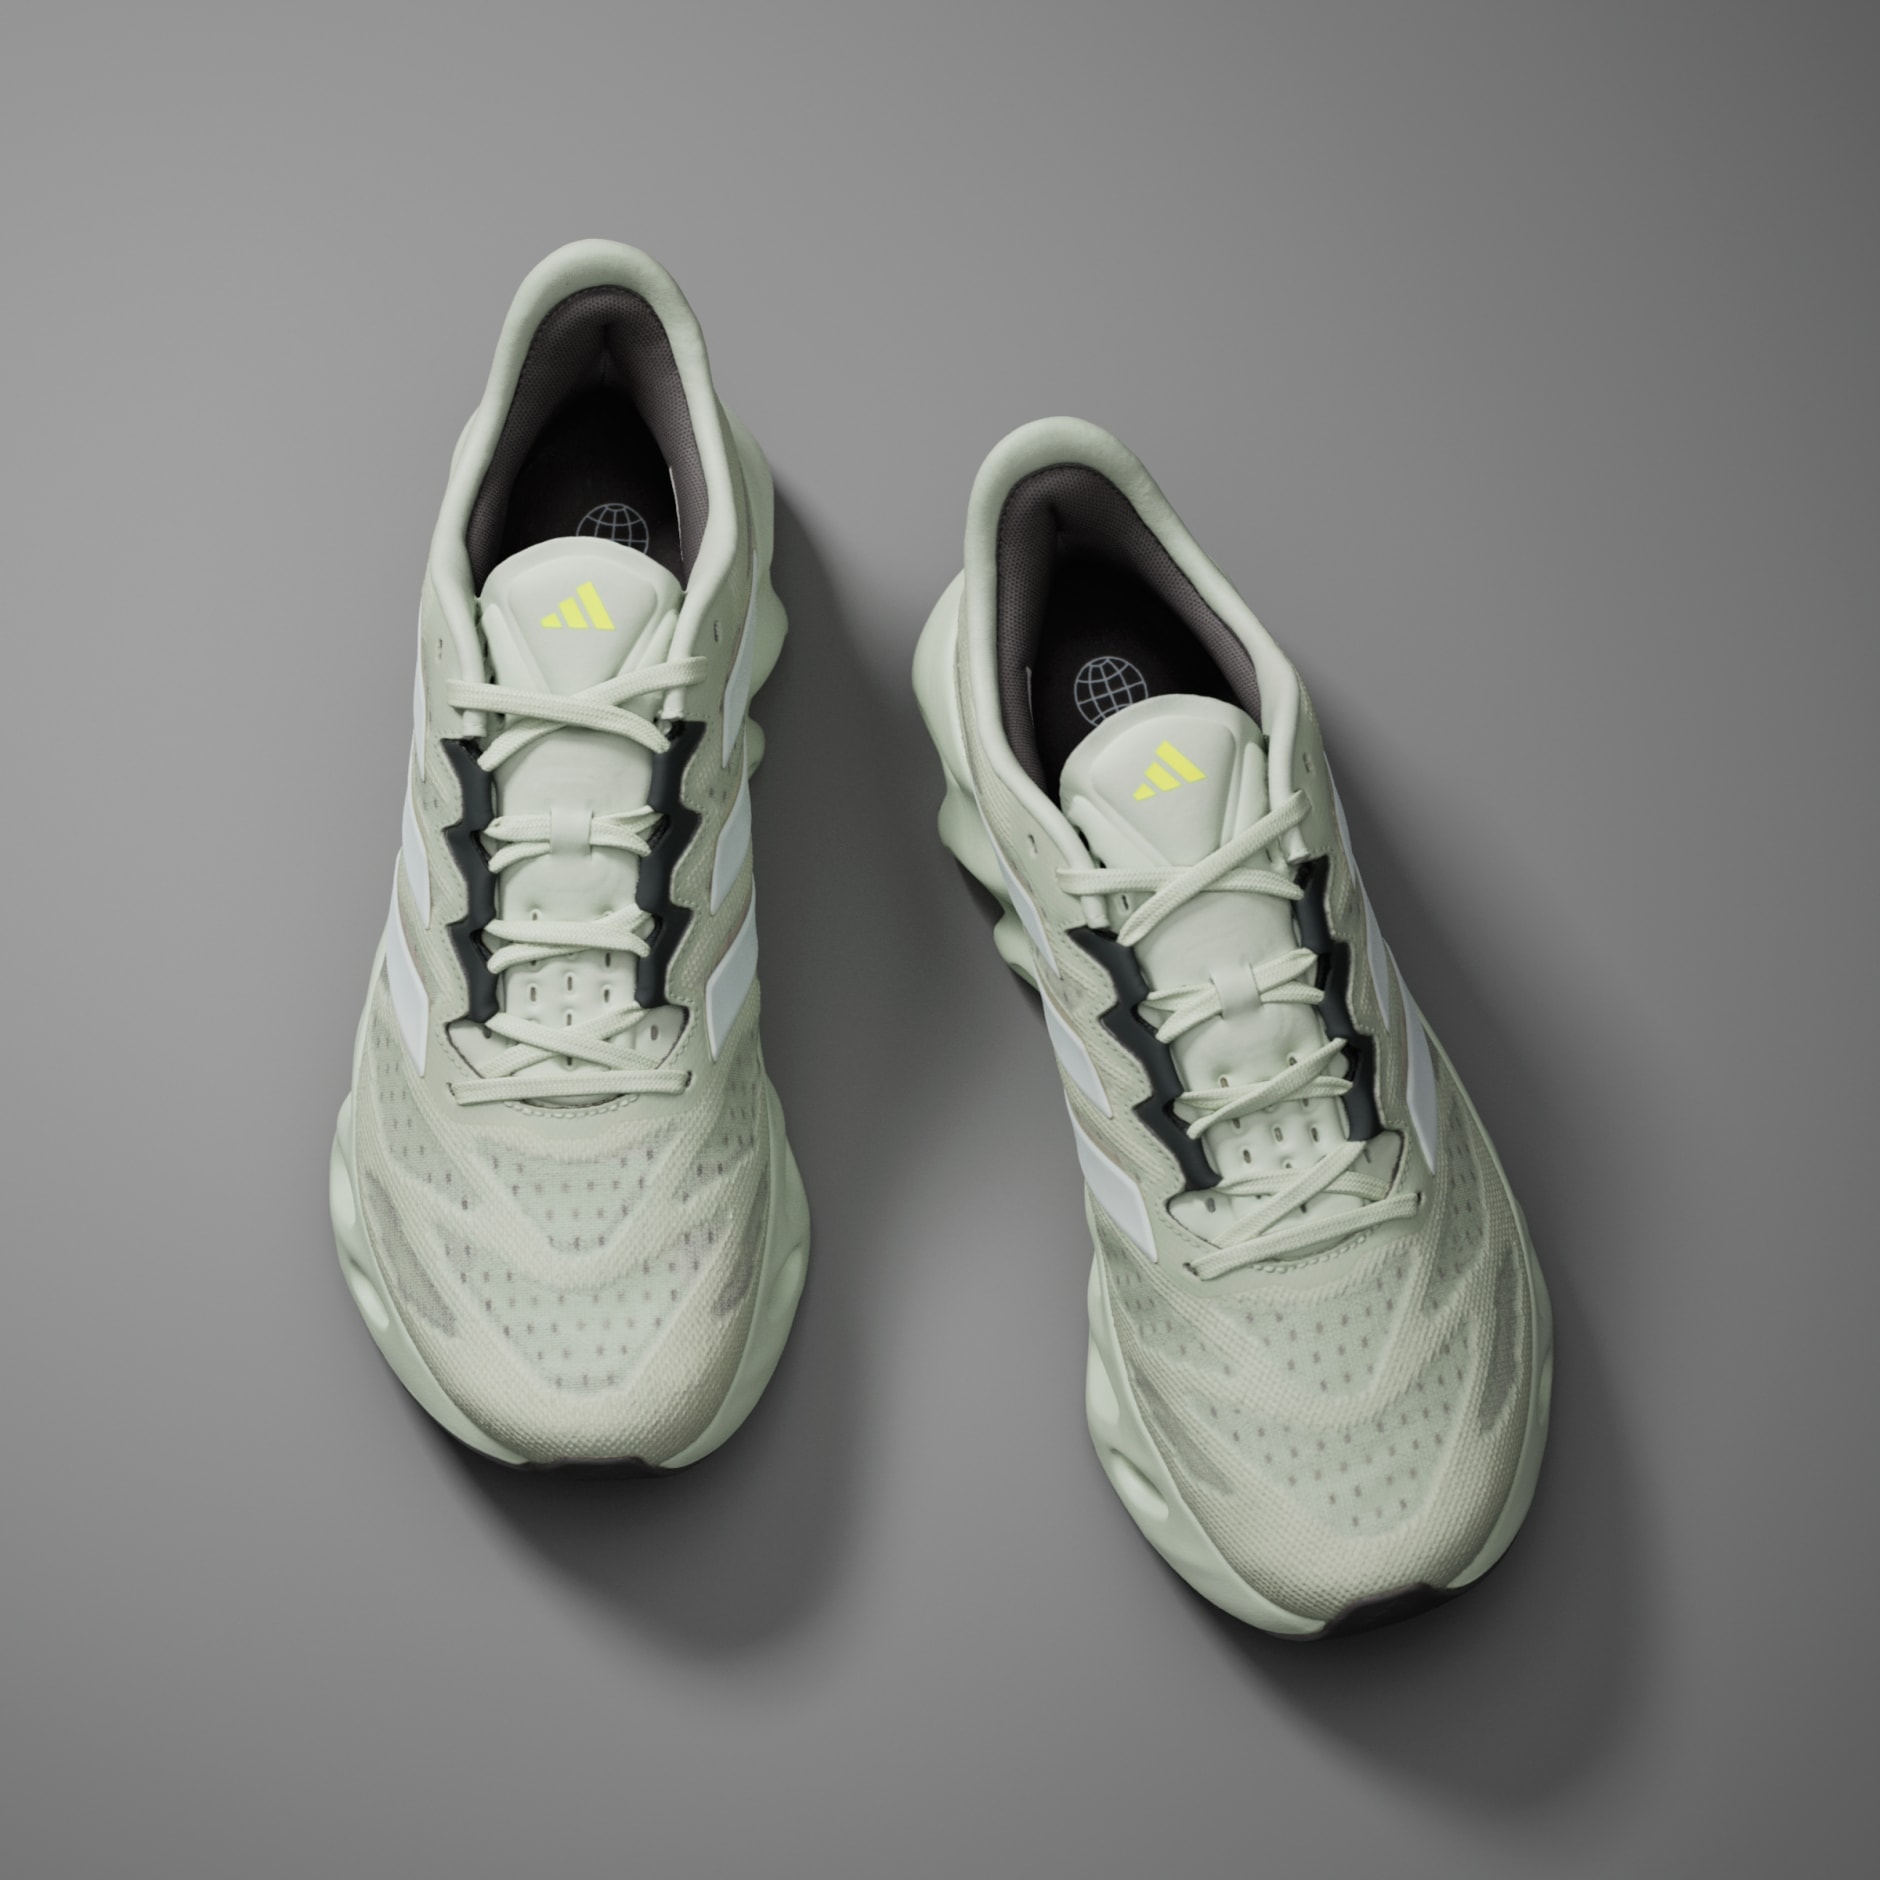 adidas Switch FWD Running Shoes - Black, Women's Running